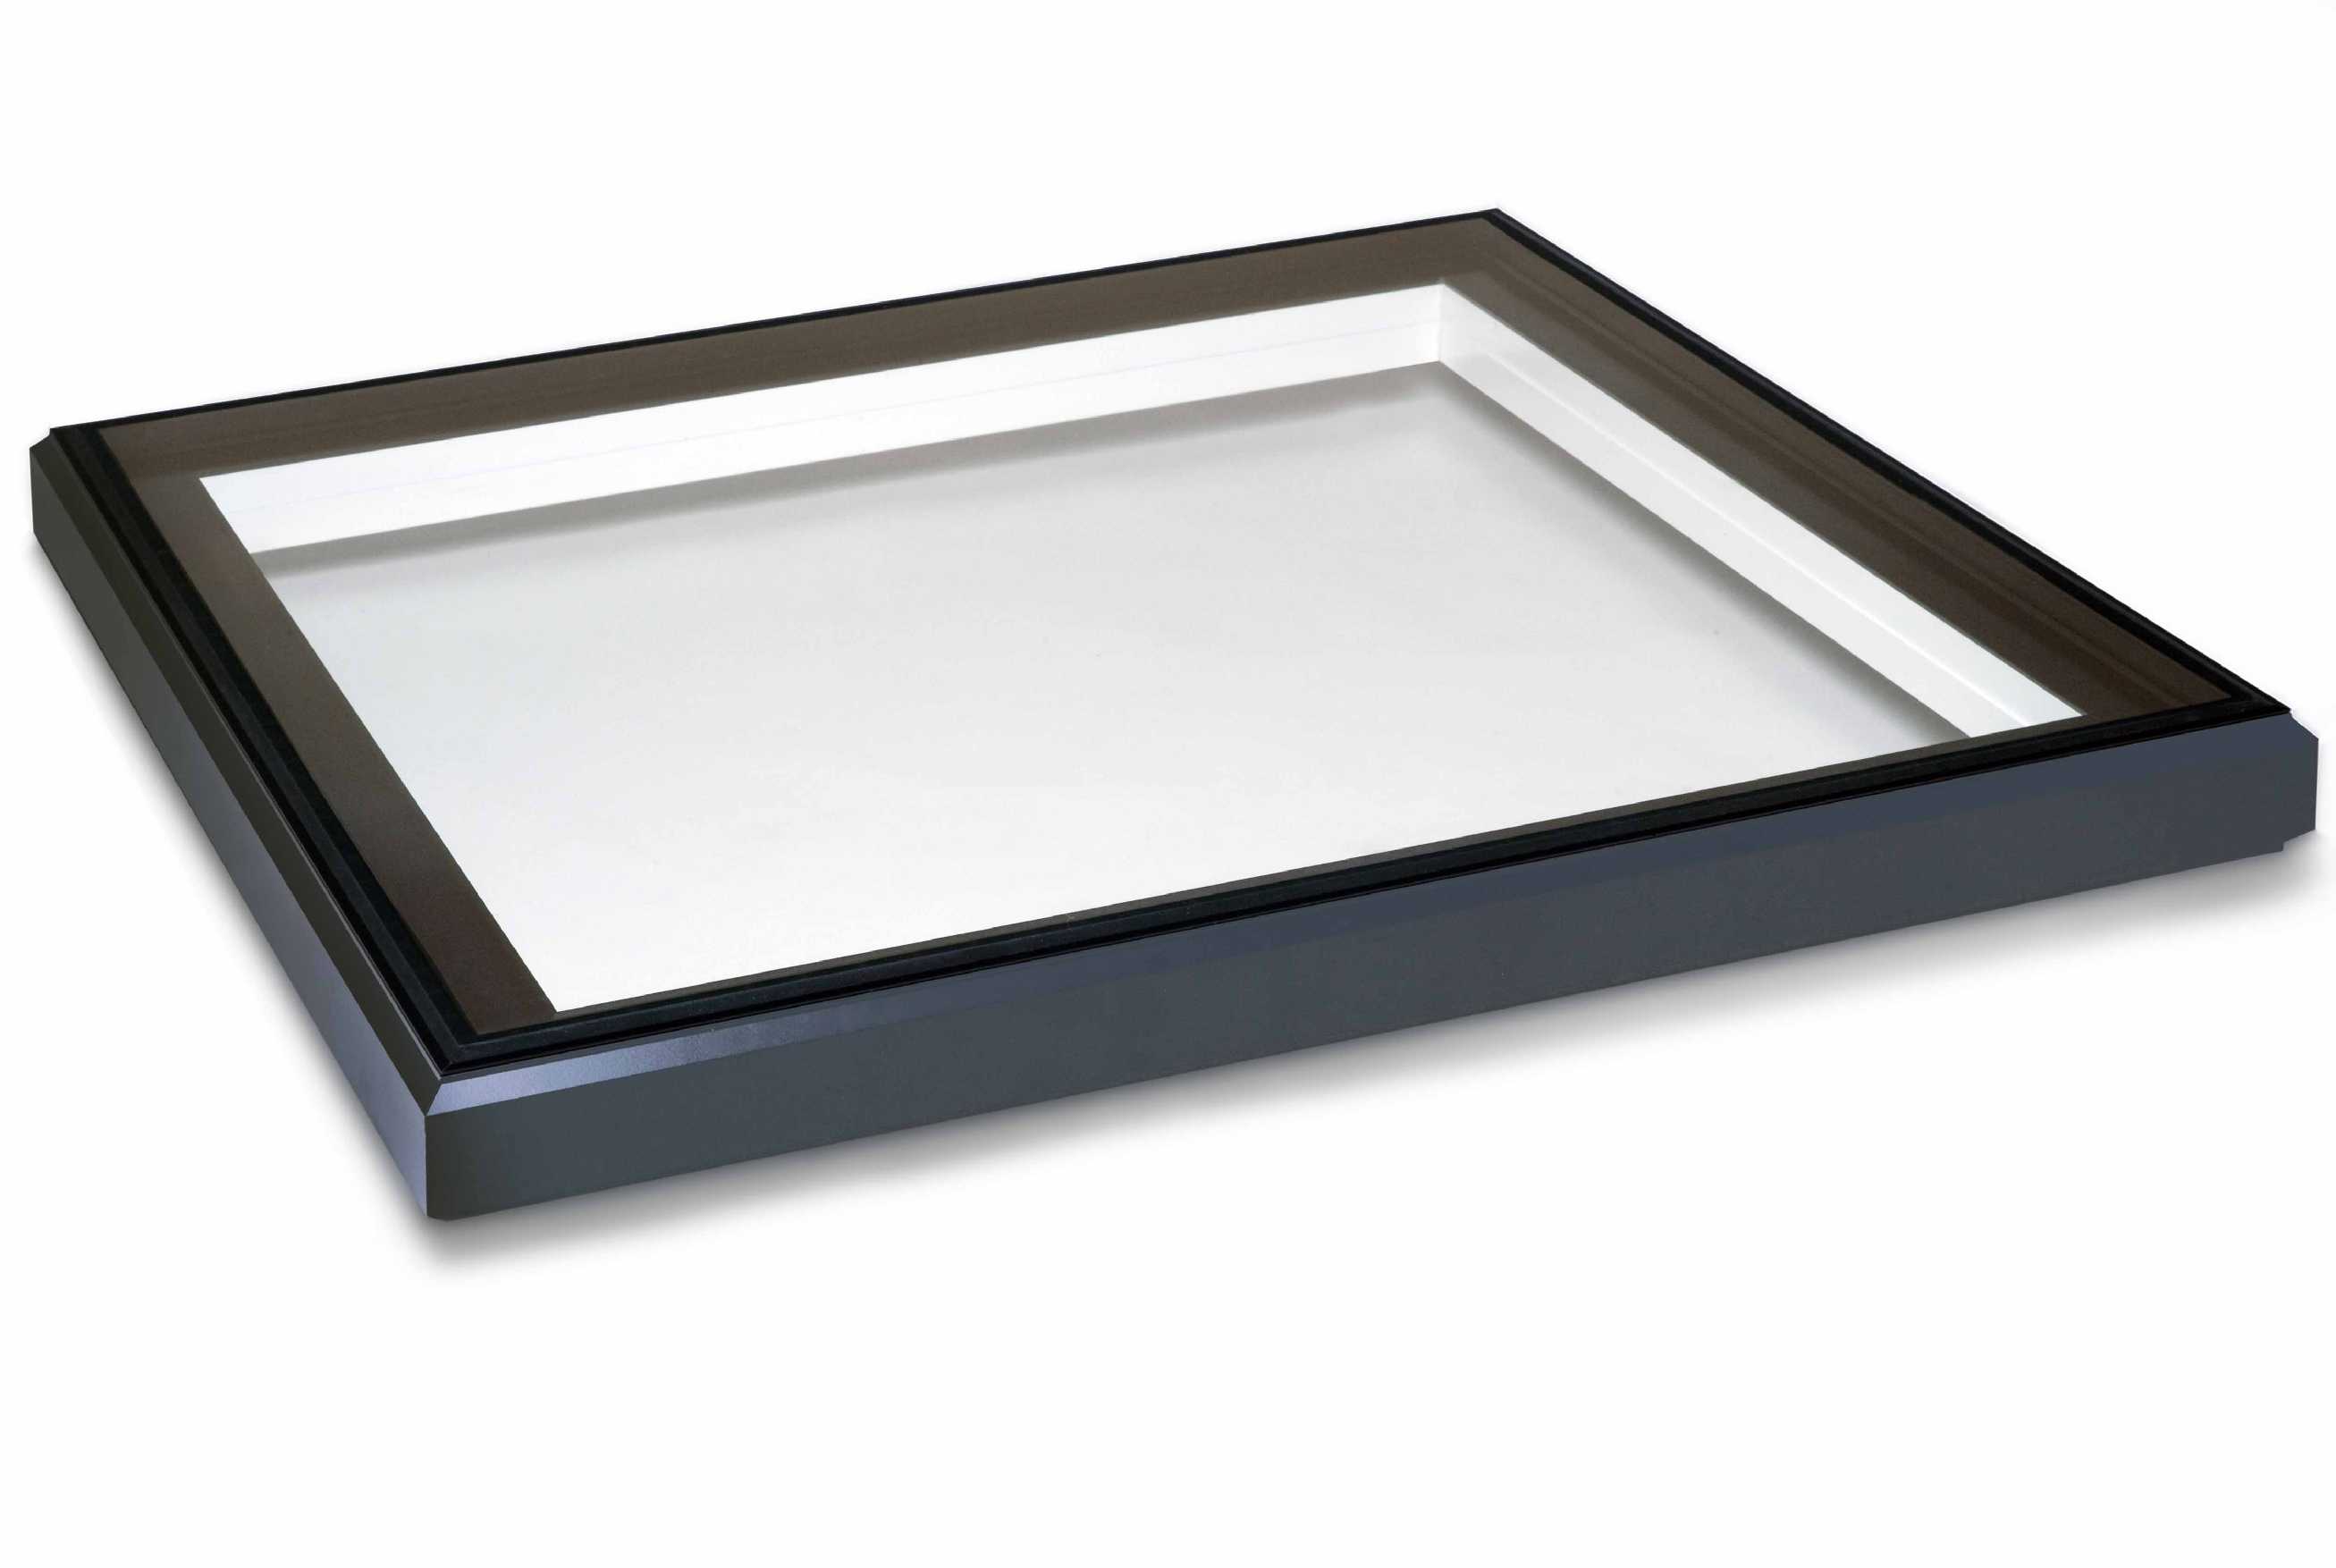 Buy EcoGard Flat Roof light, Triple Glazed, Fixed, 1,000mm x 2,000mm online today